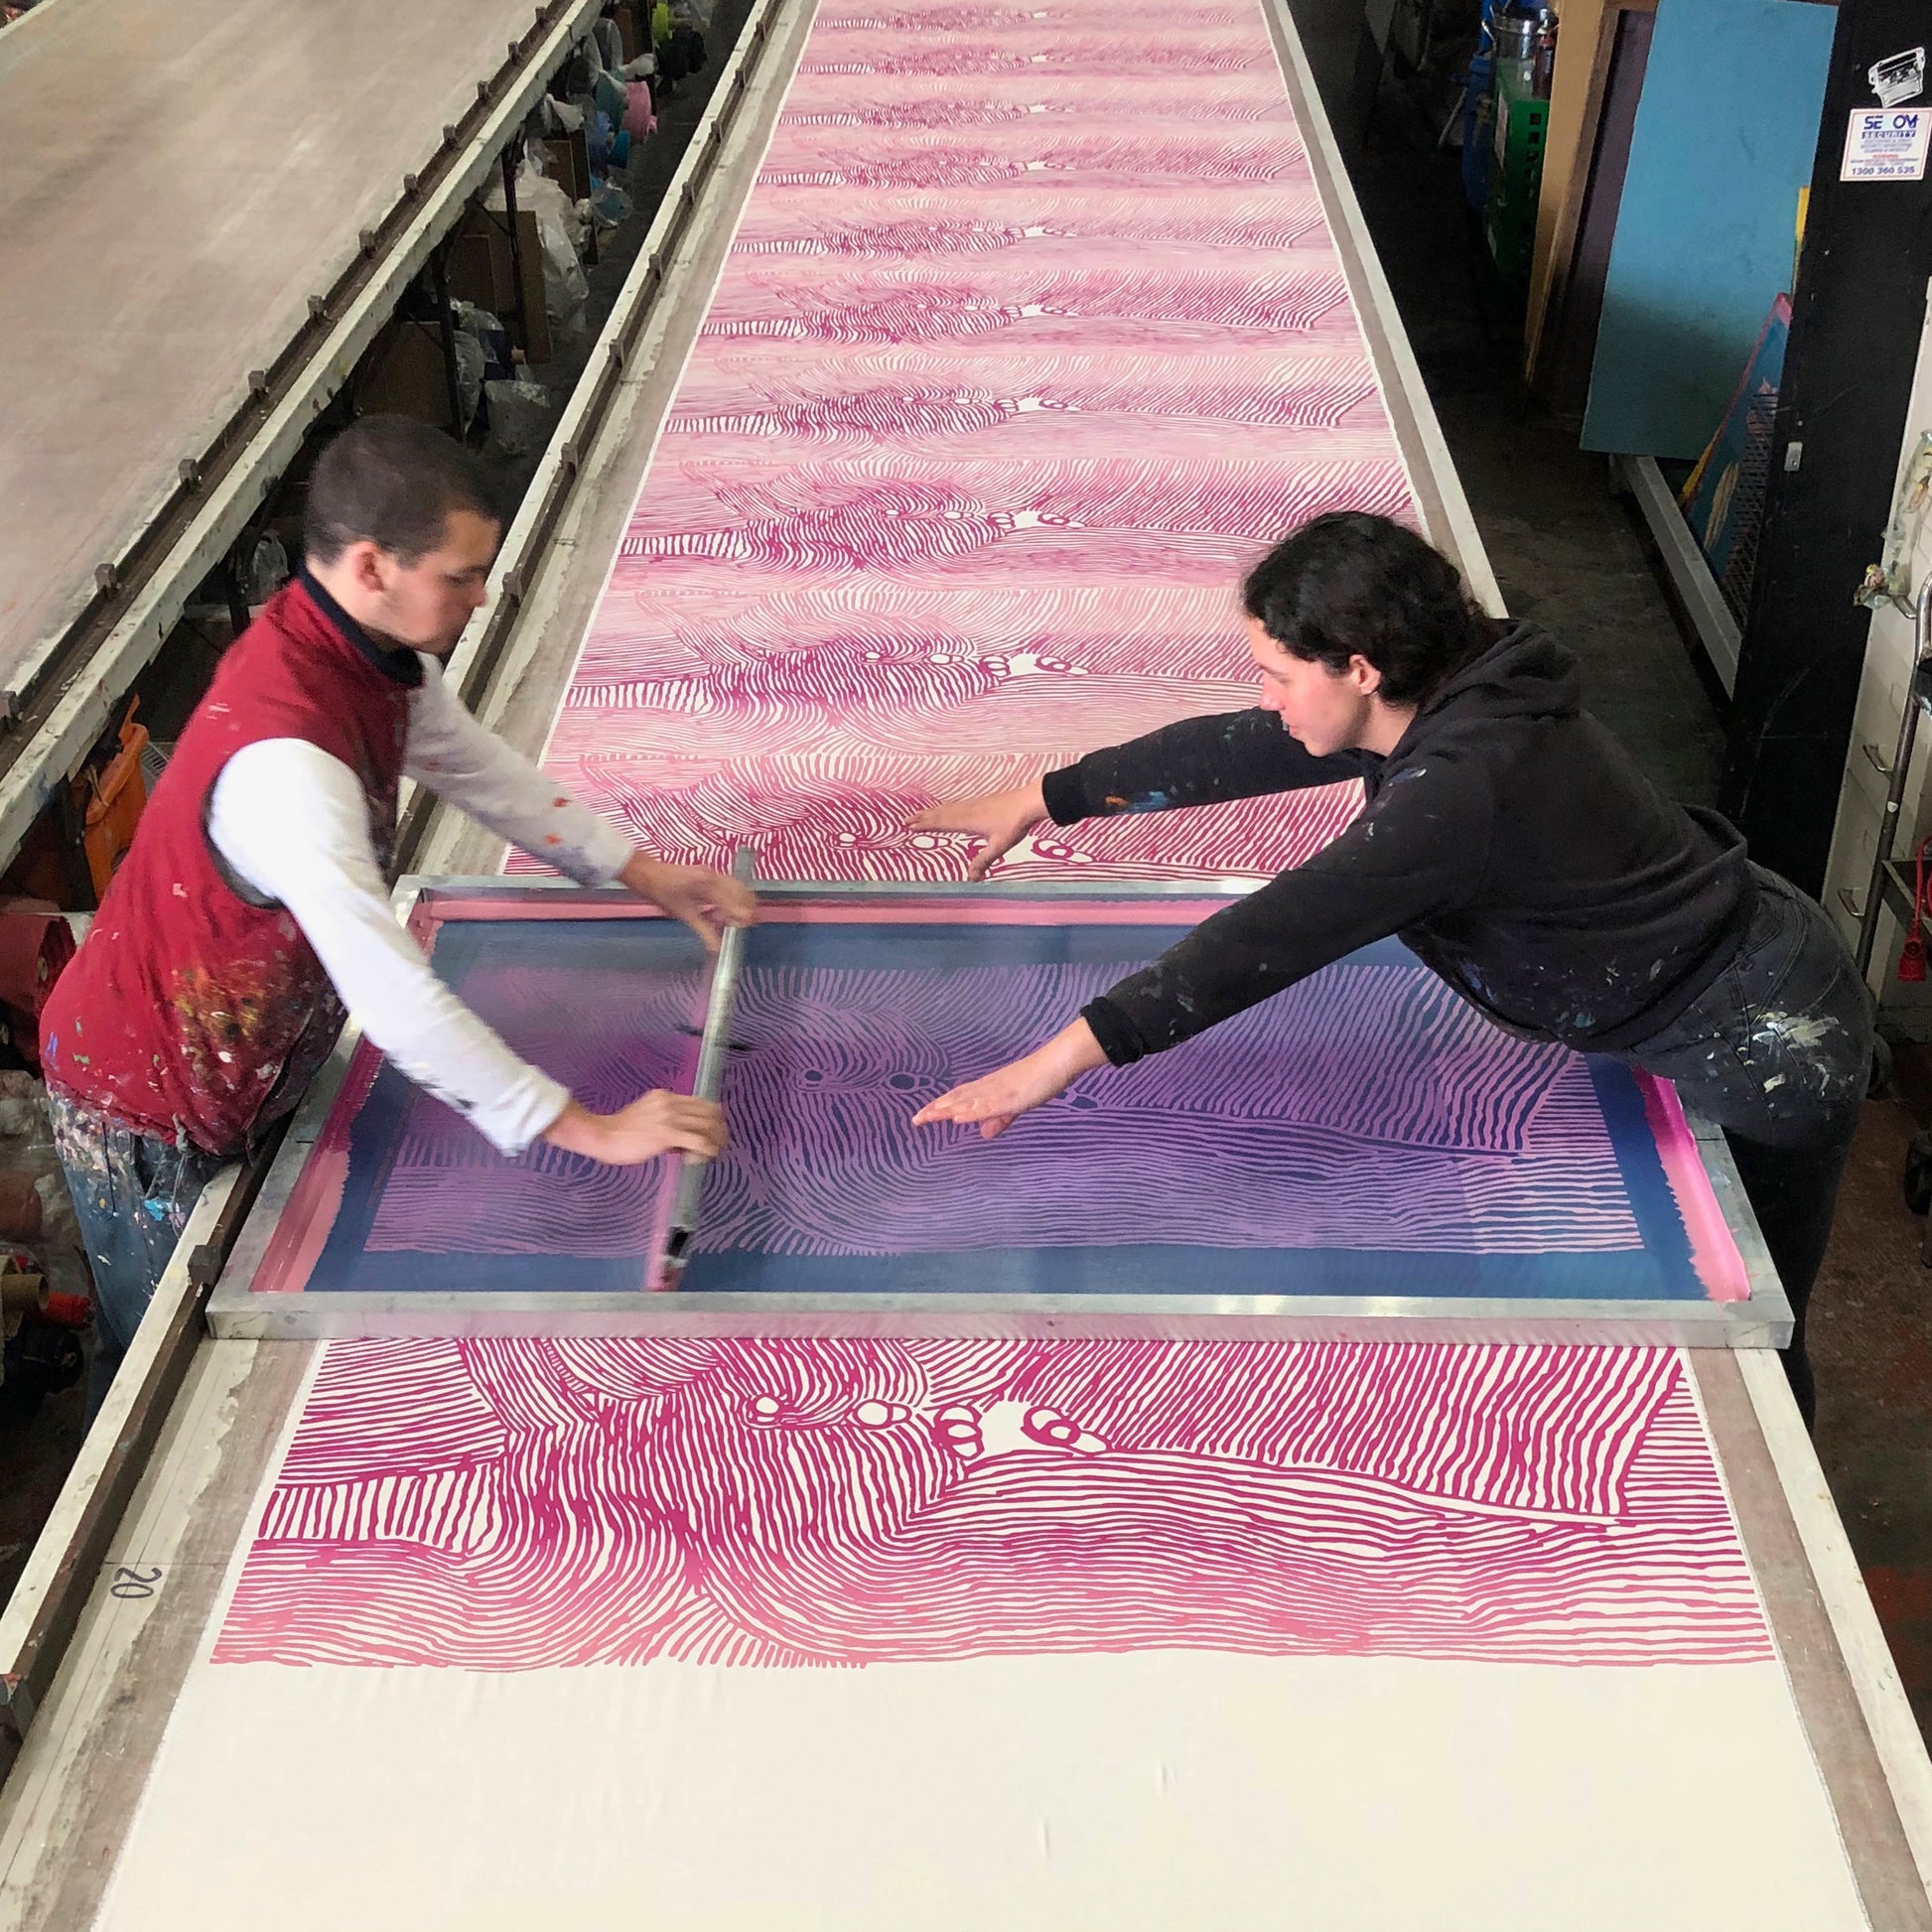 Australia, Ikuntji Artists, Printed Textiles